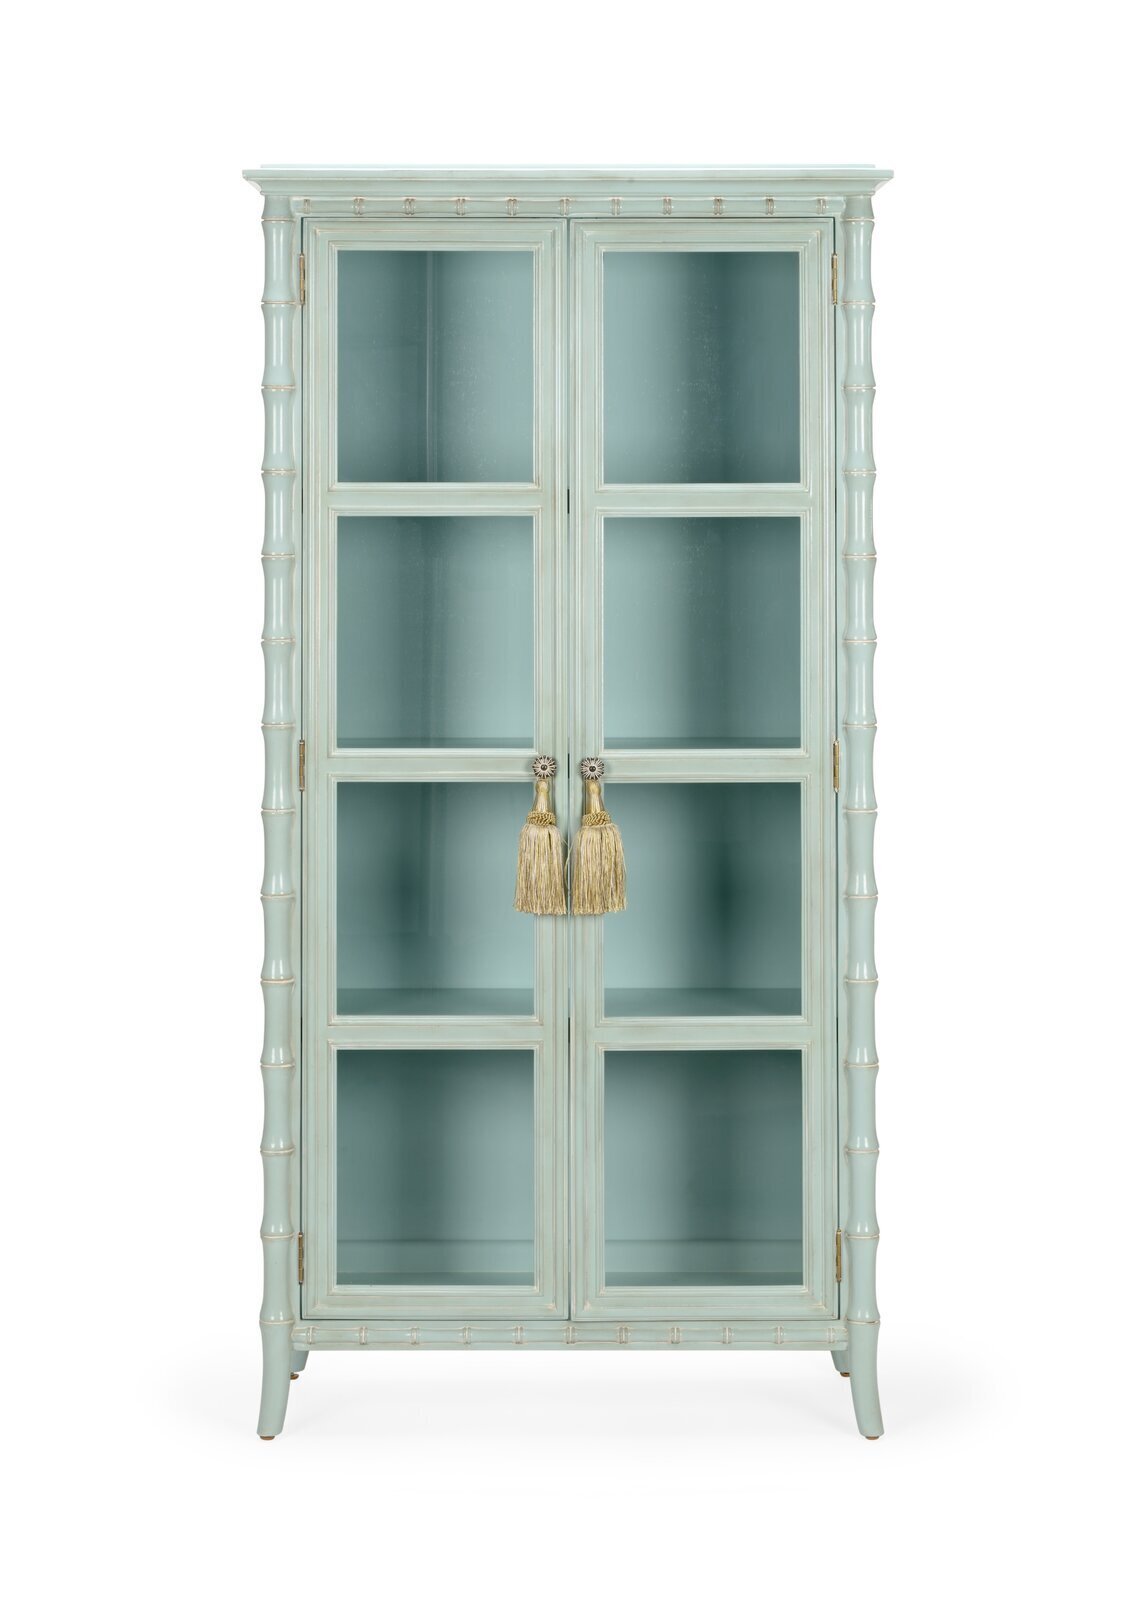 Retro Rustic Curio Cabinet with Glass Doors